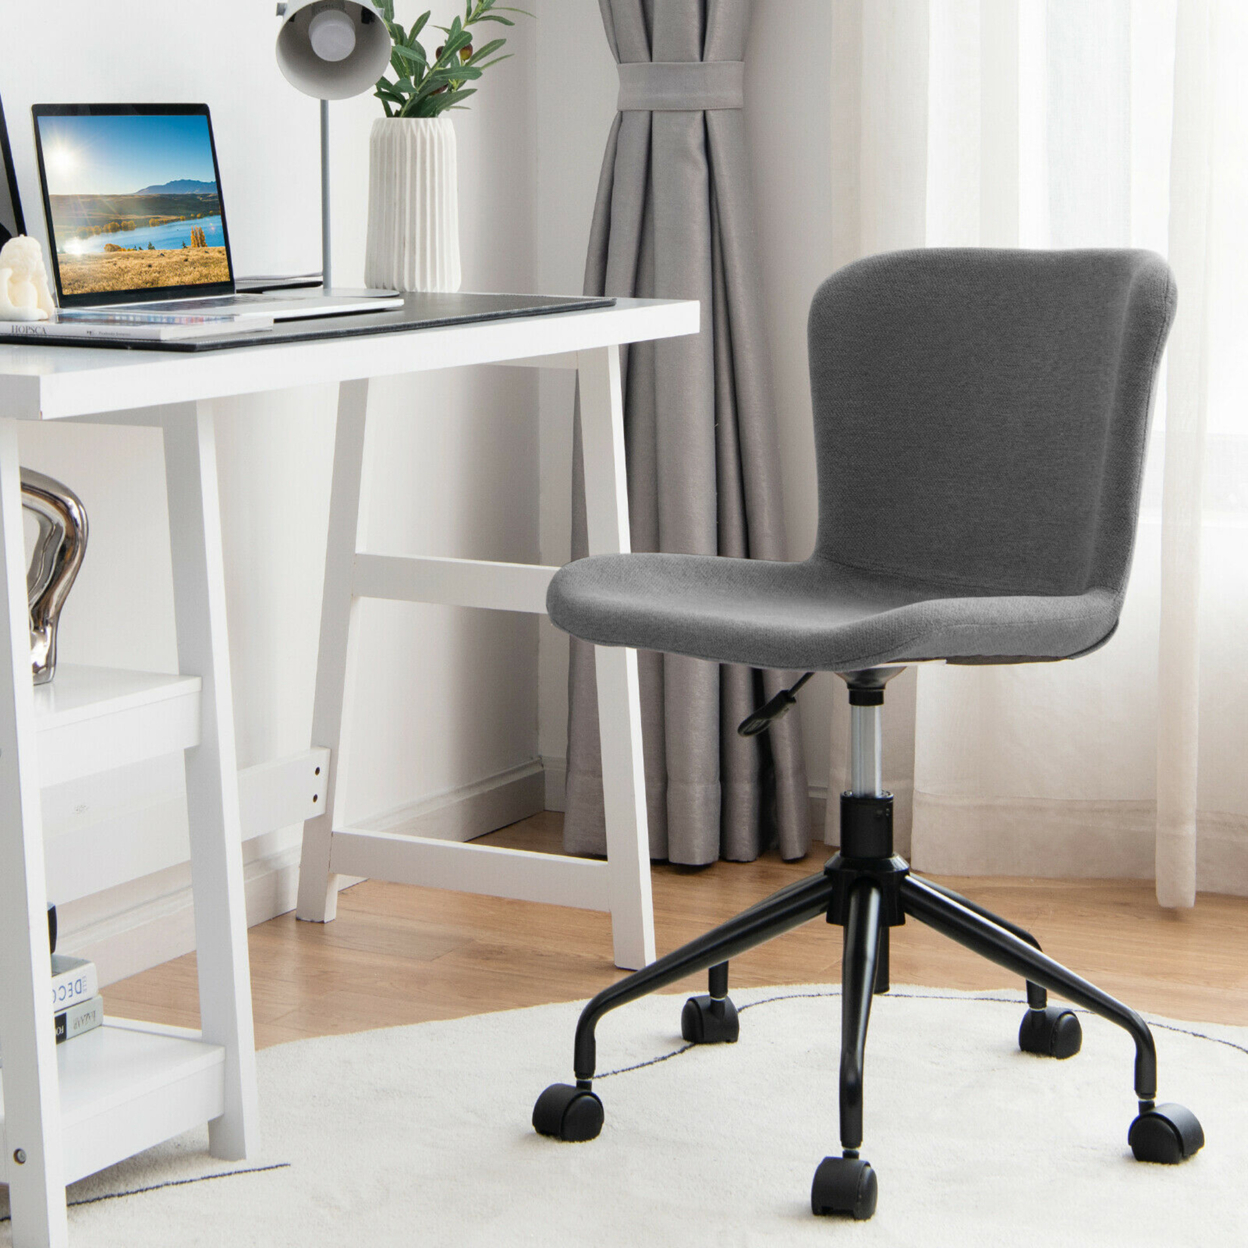 Mid Back Armless Office Chair Adjustable Swivel Linen Task Chair - Blue